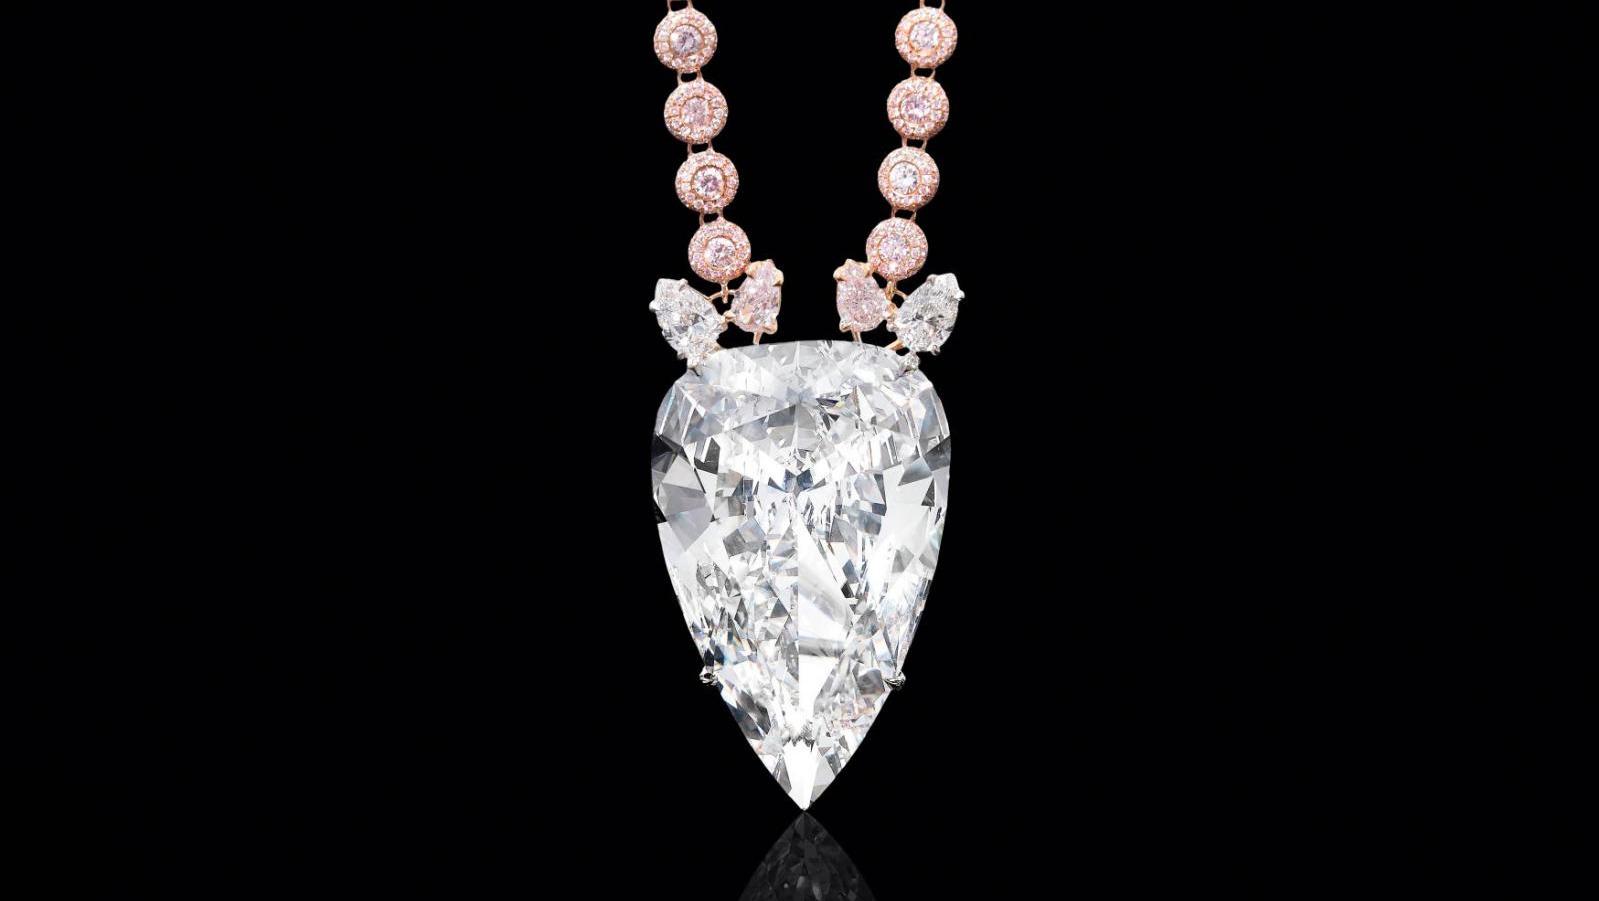 Golconda IIa diamond, 76.52 carats, color D, purity IF, mounted on an 18k gray gold... A Golconda Diamond, The Price of Eternity